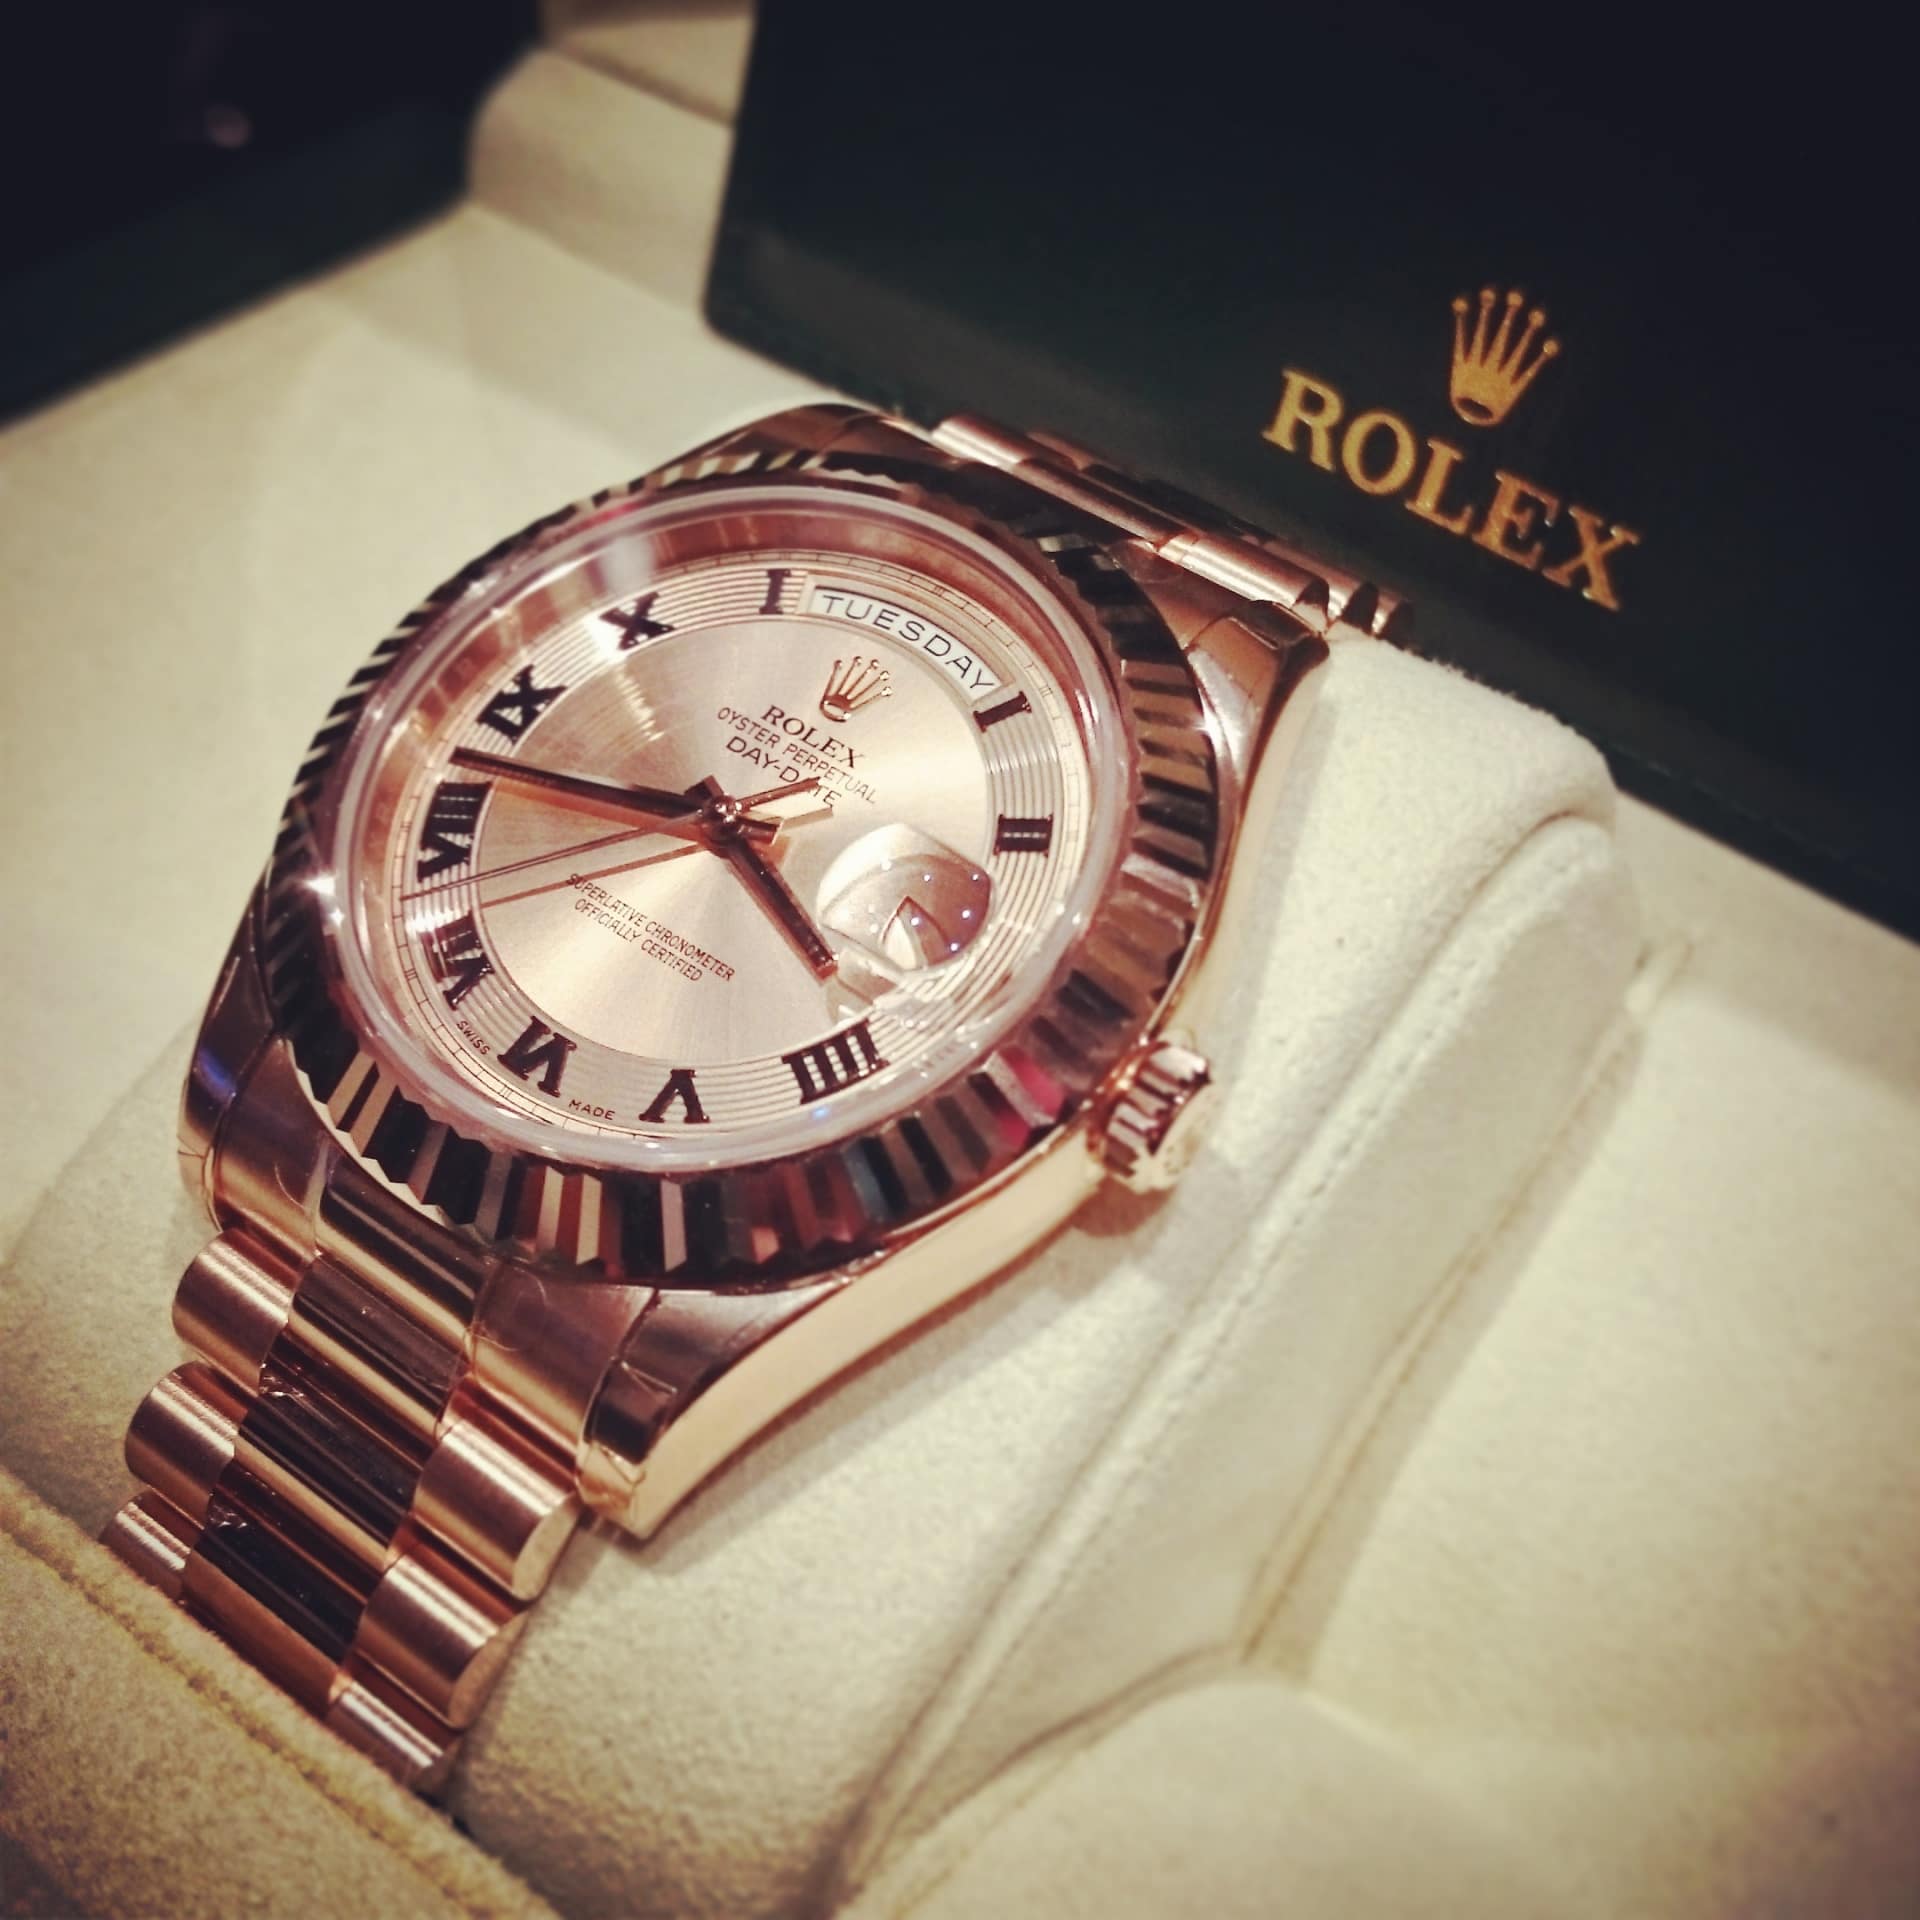 Rolex, le luxe intemporel